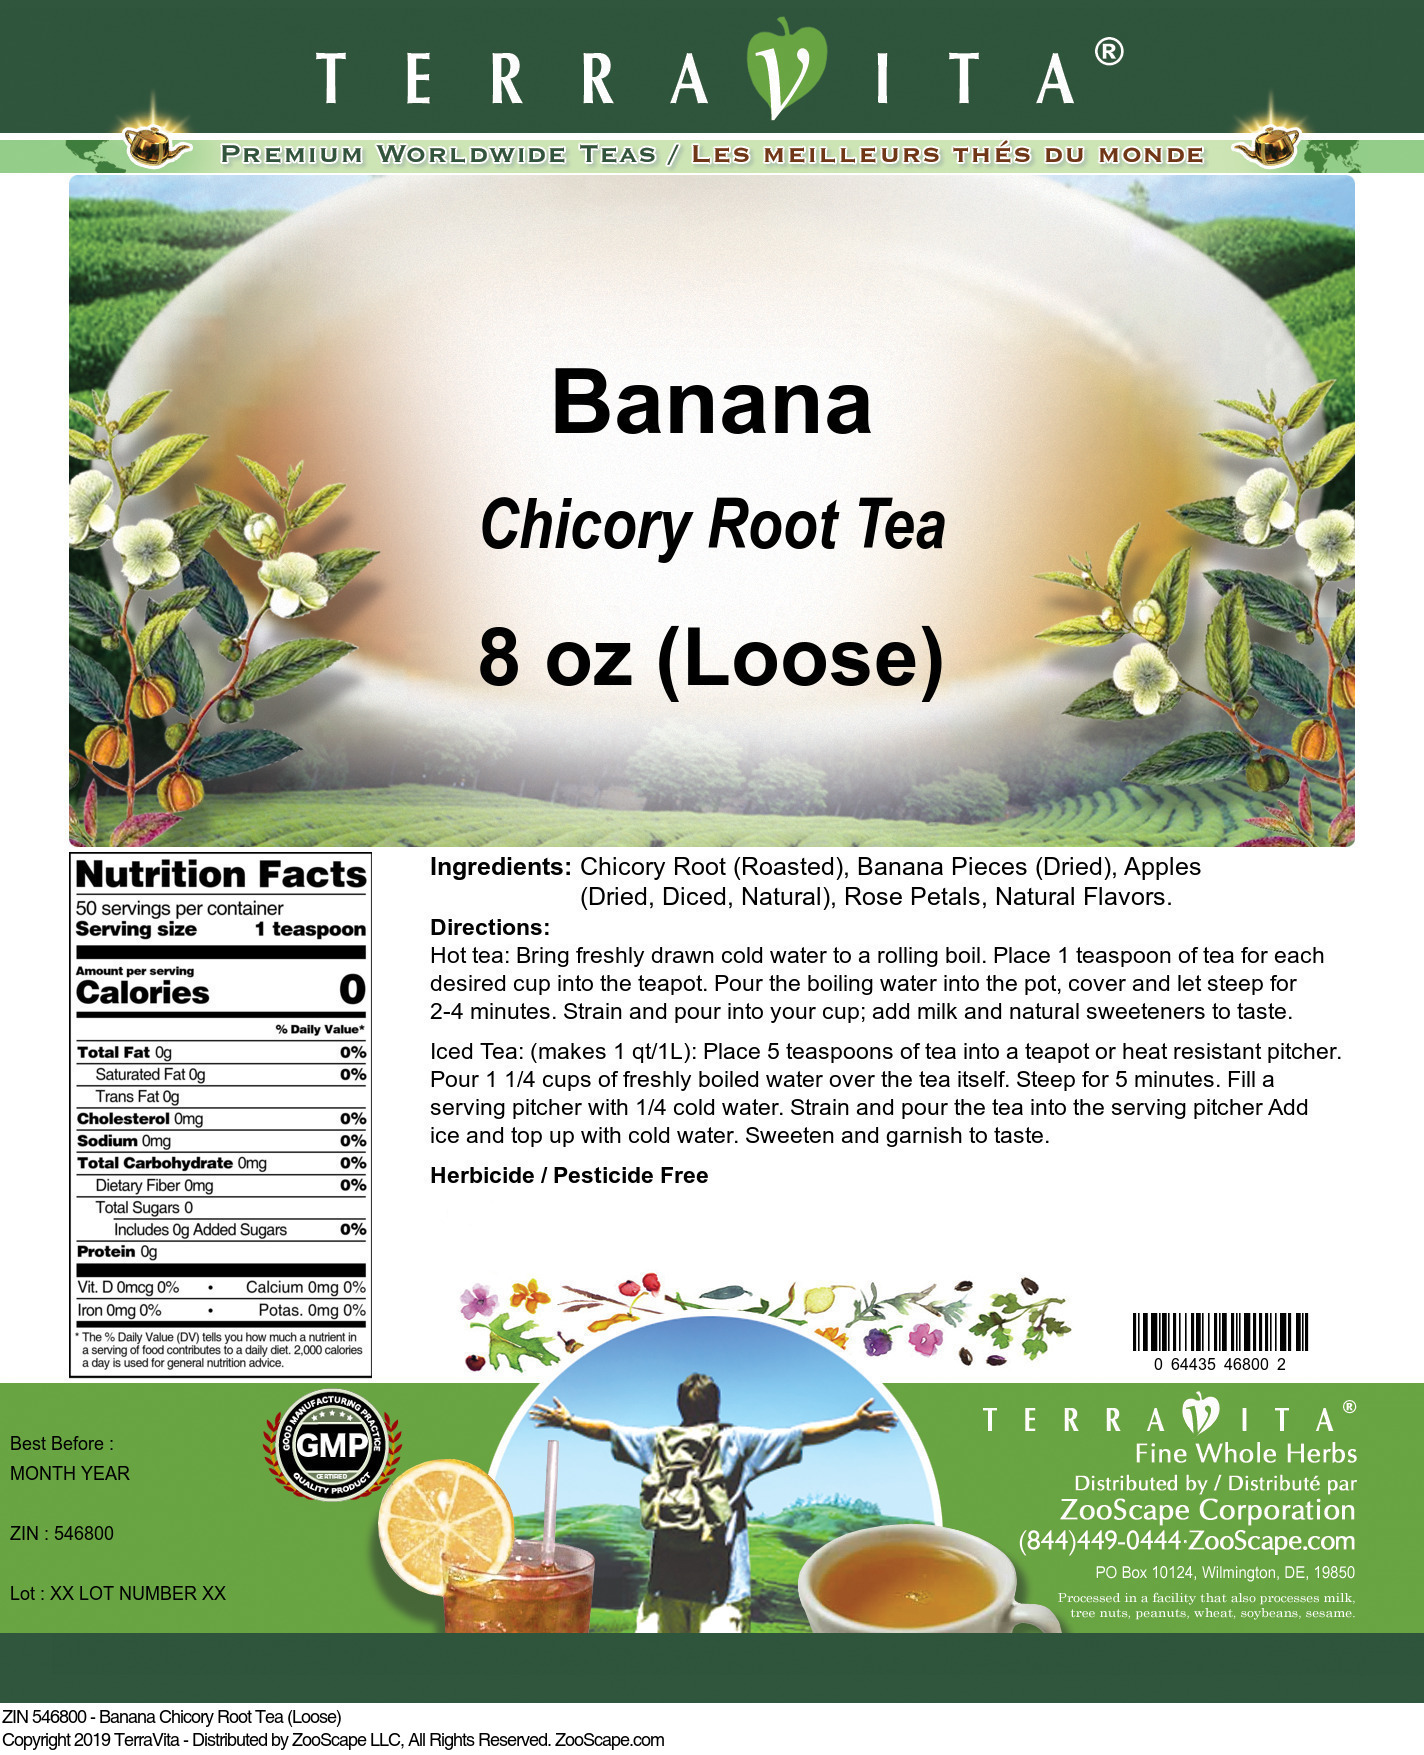 Banana Chicory Root Tea (Loose) - Label